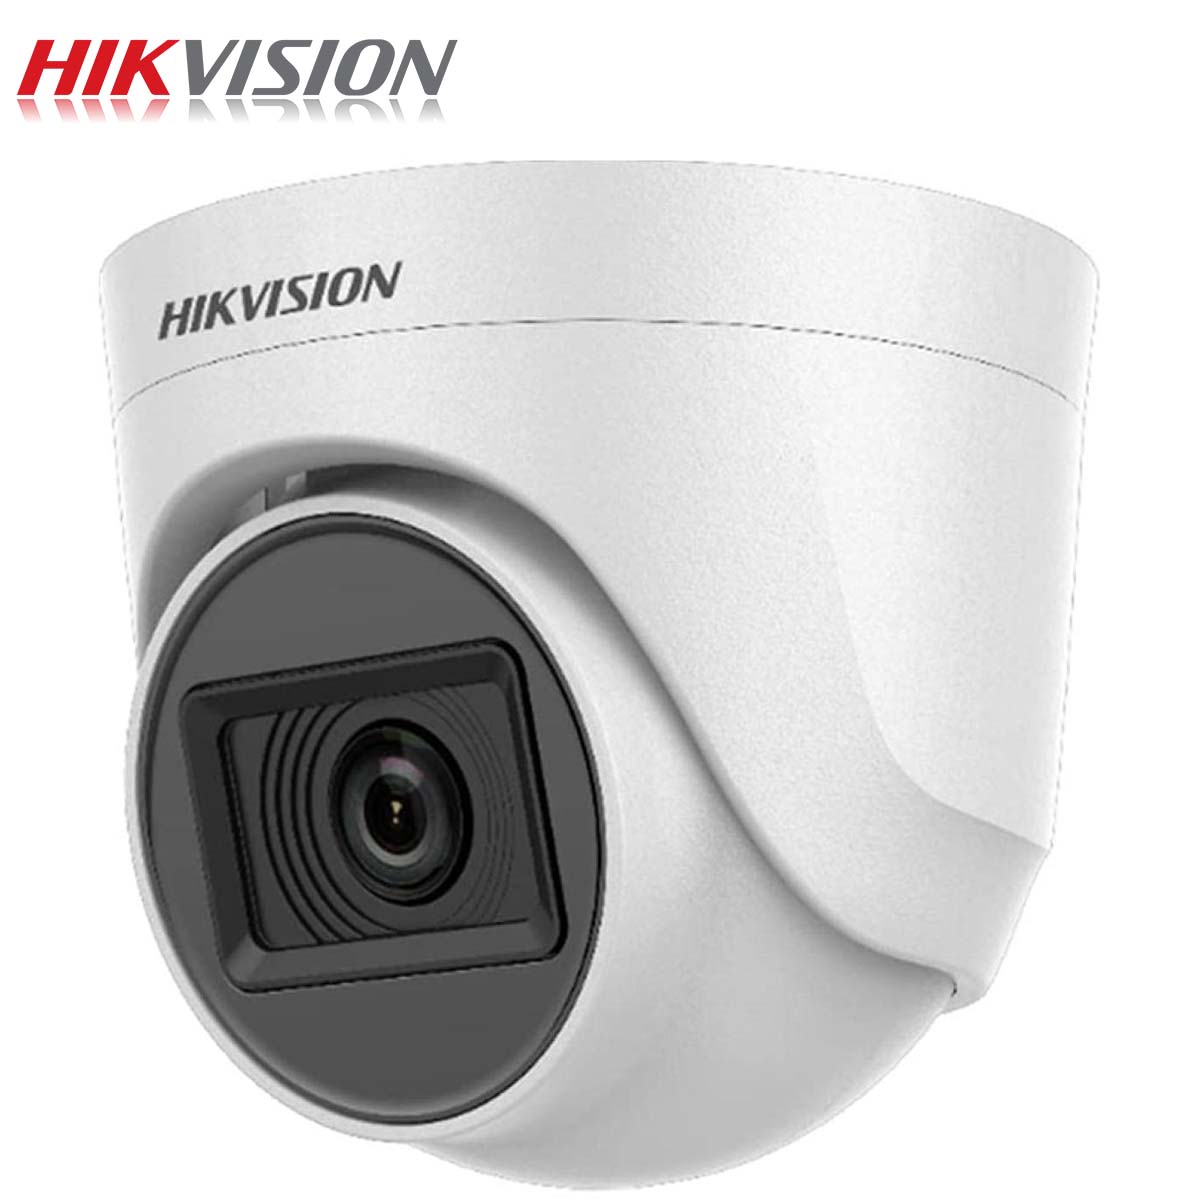 HIKVISION DS-2CE76D0T-EXIPF 2 MP Indoor Fixed Turret Camera